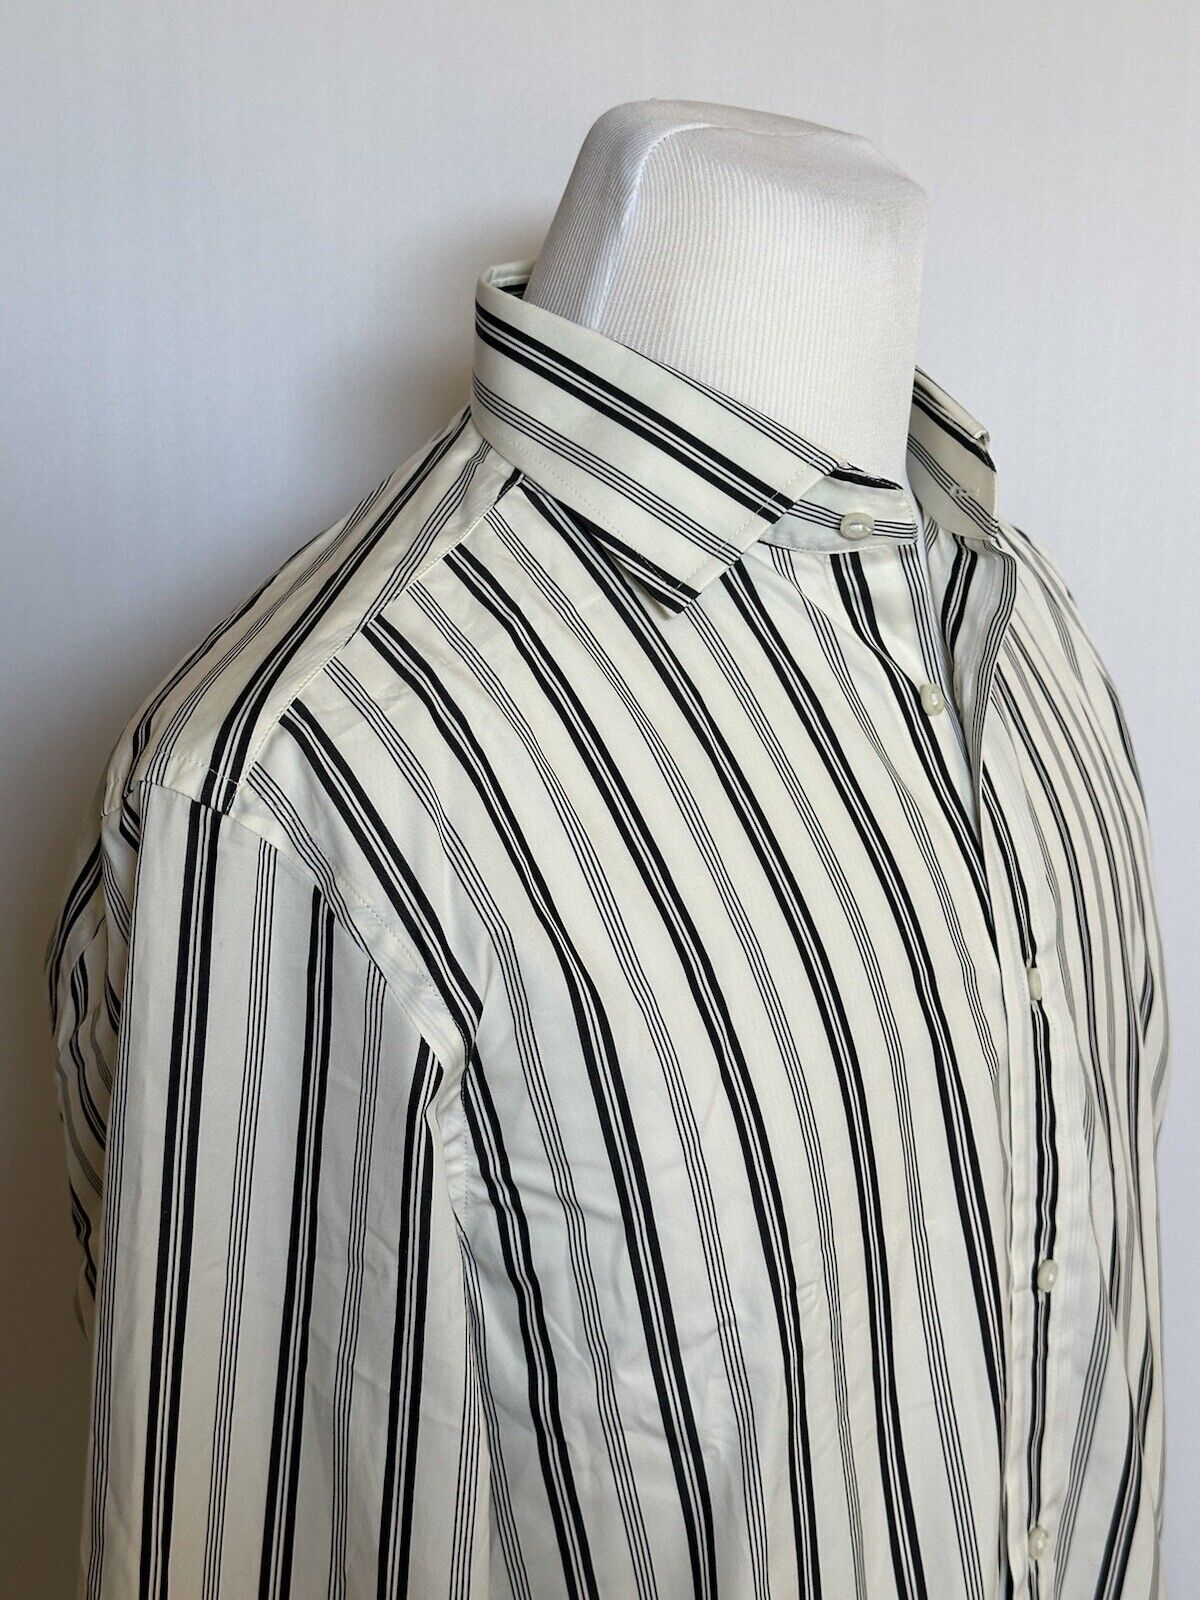 Ralph Lauren Purple Label Men's Striped Black/White Dress Shirt 16.5 IT NWT $495